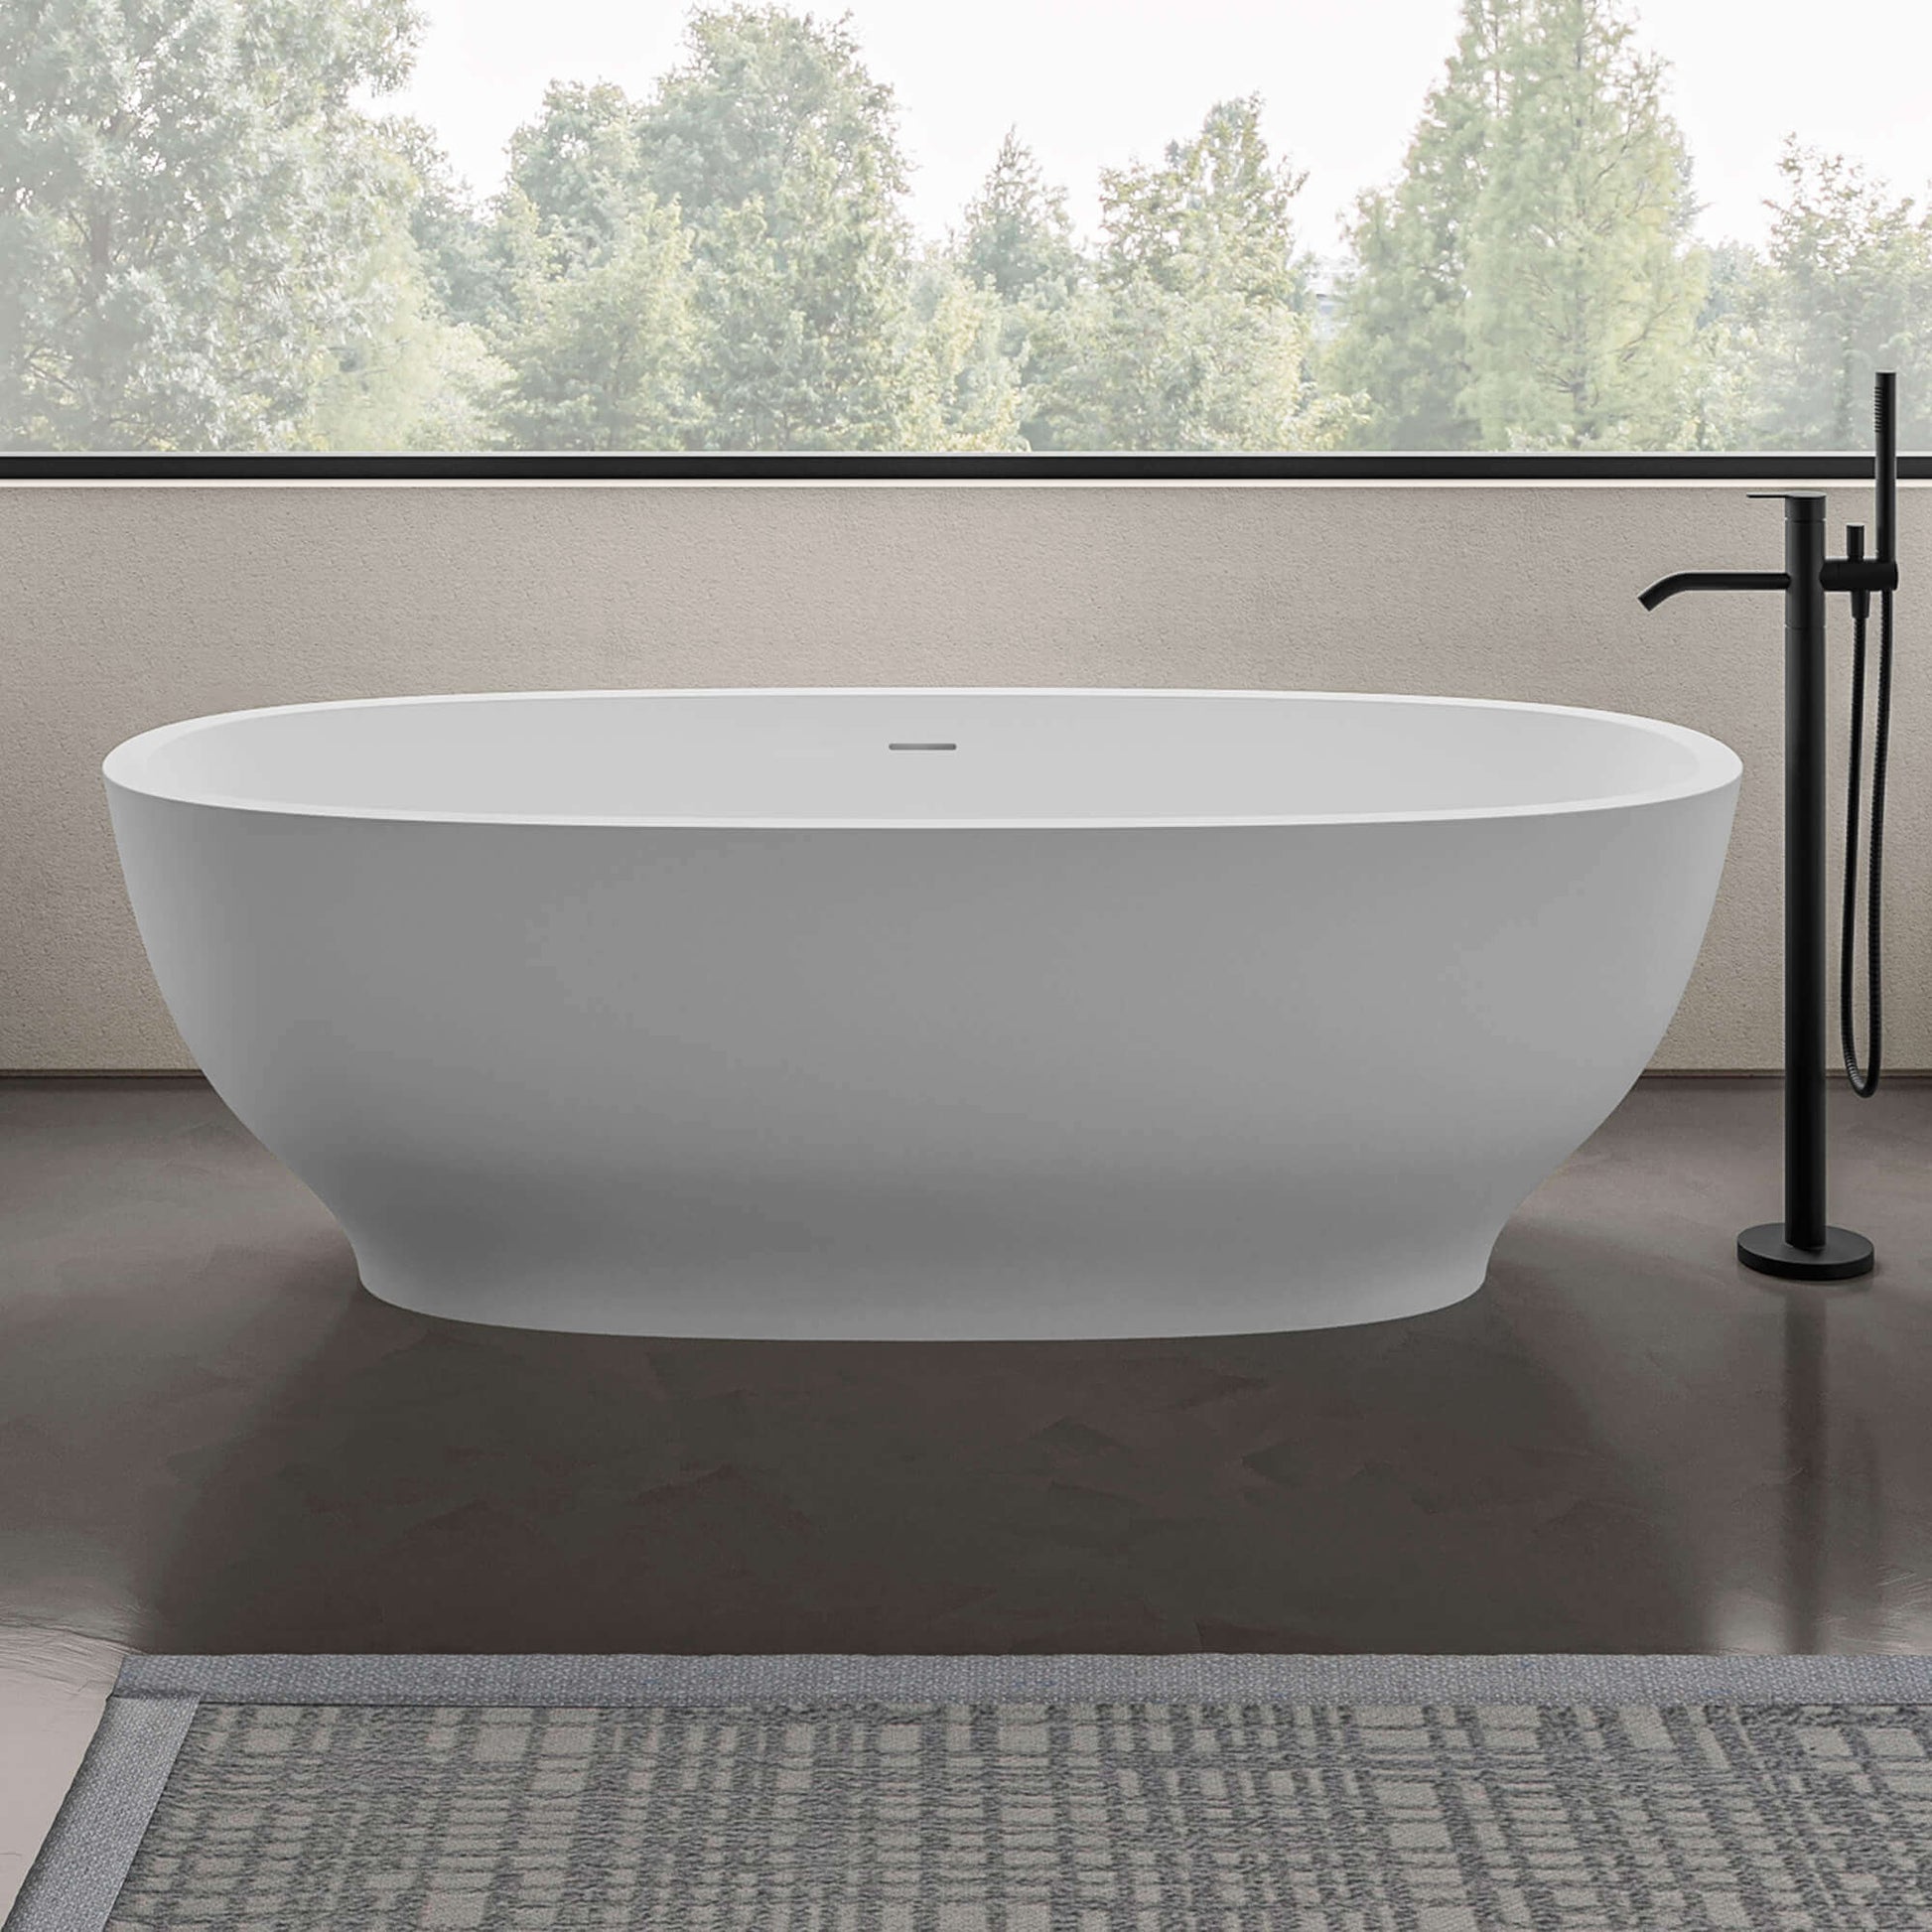 Ruvati Viola epiStone Oval Freestanding Bath Tub - In Bright Neutral Bathroom